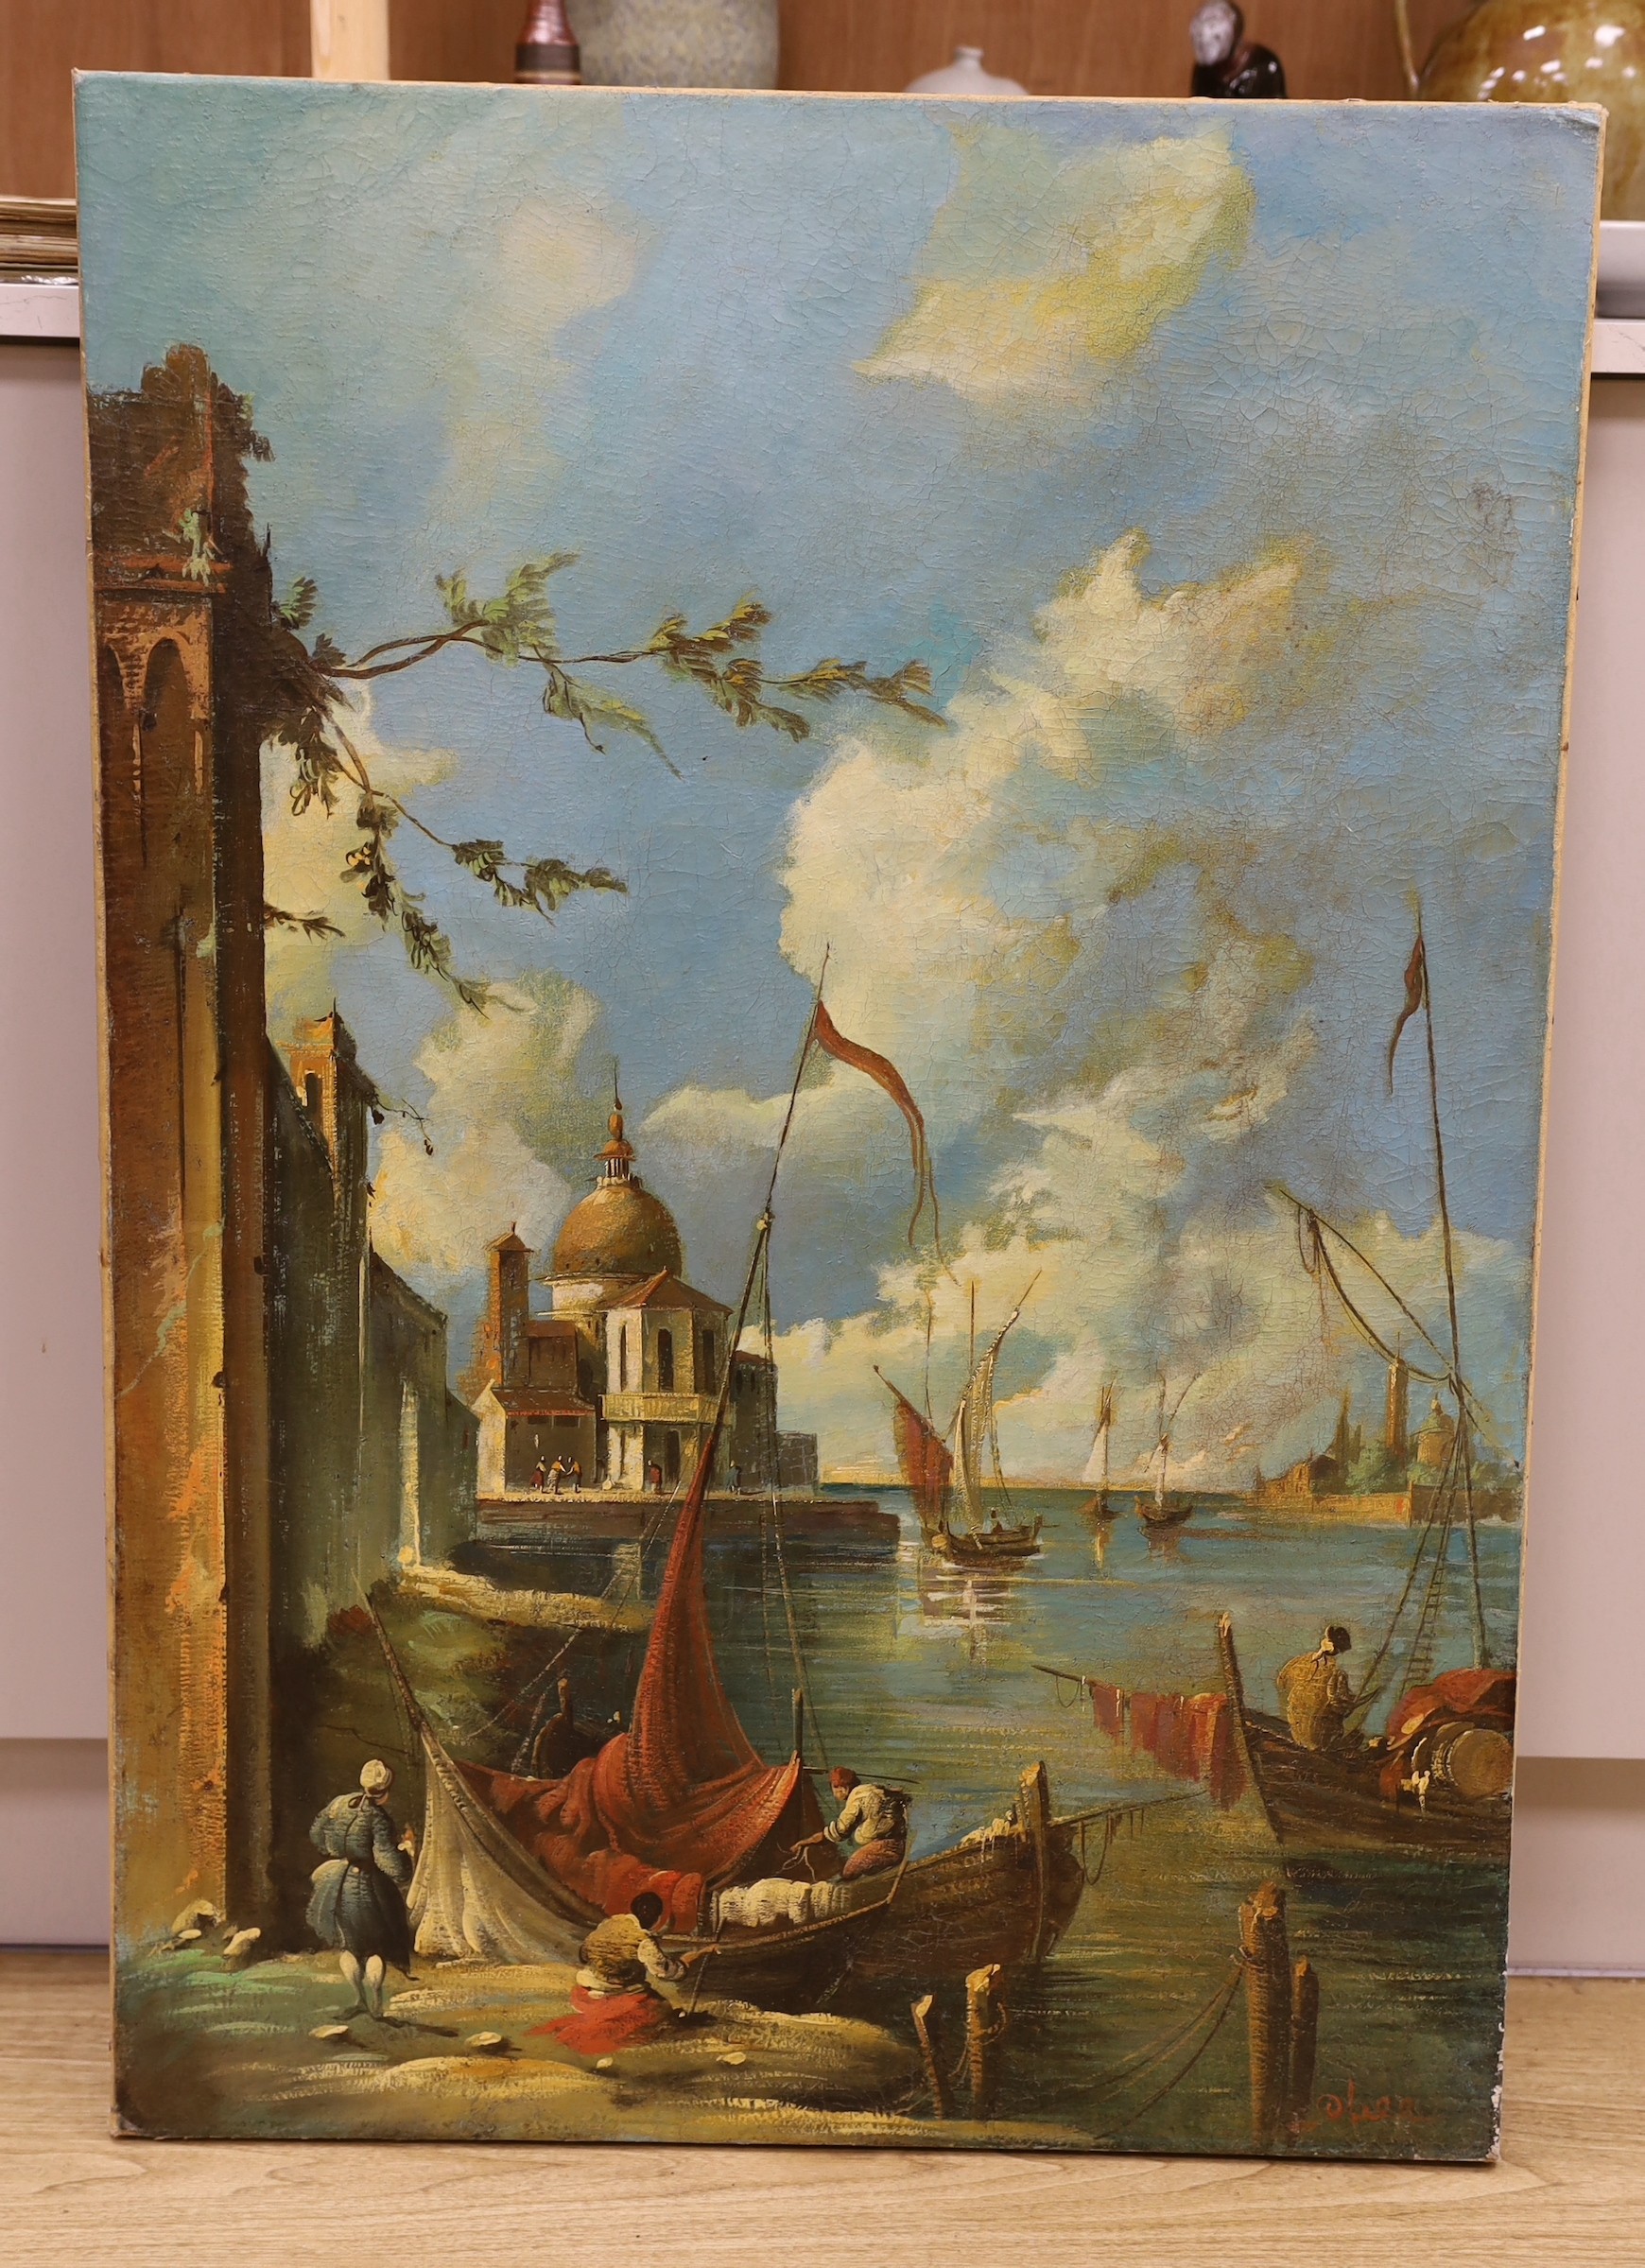 Italian School, oil on canvas, 17th century style view of Venice, bears signature, 99 x 69cm